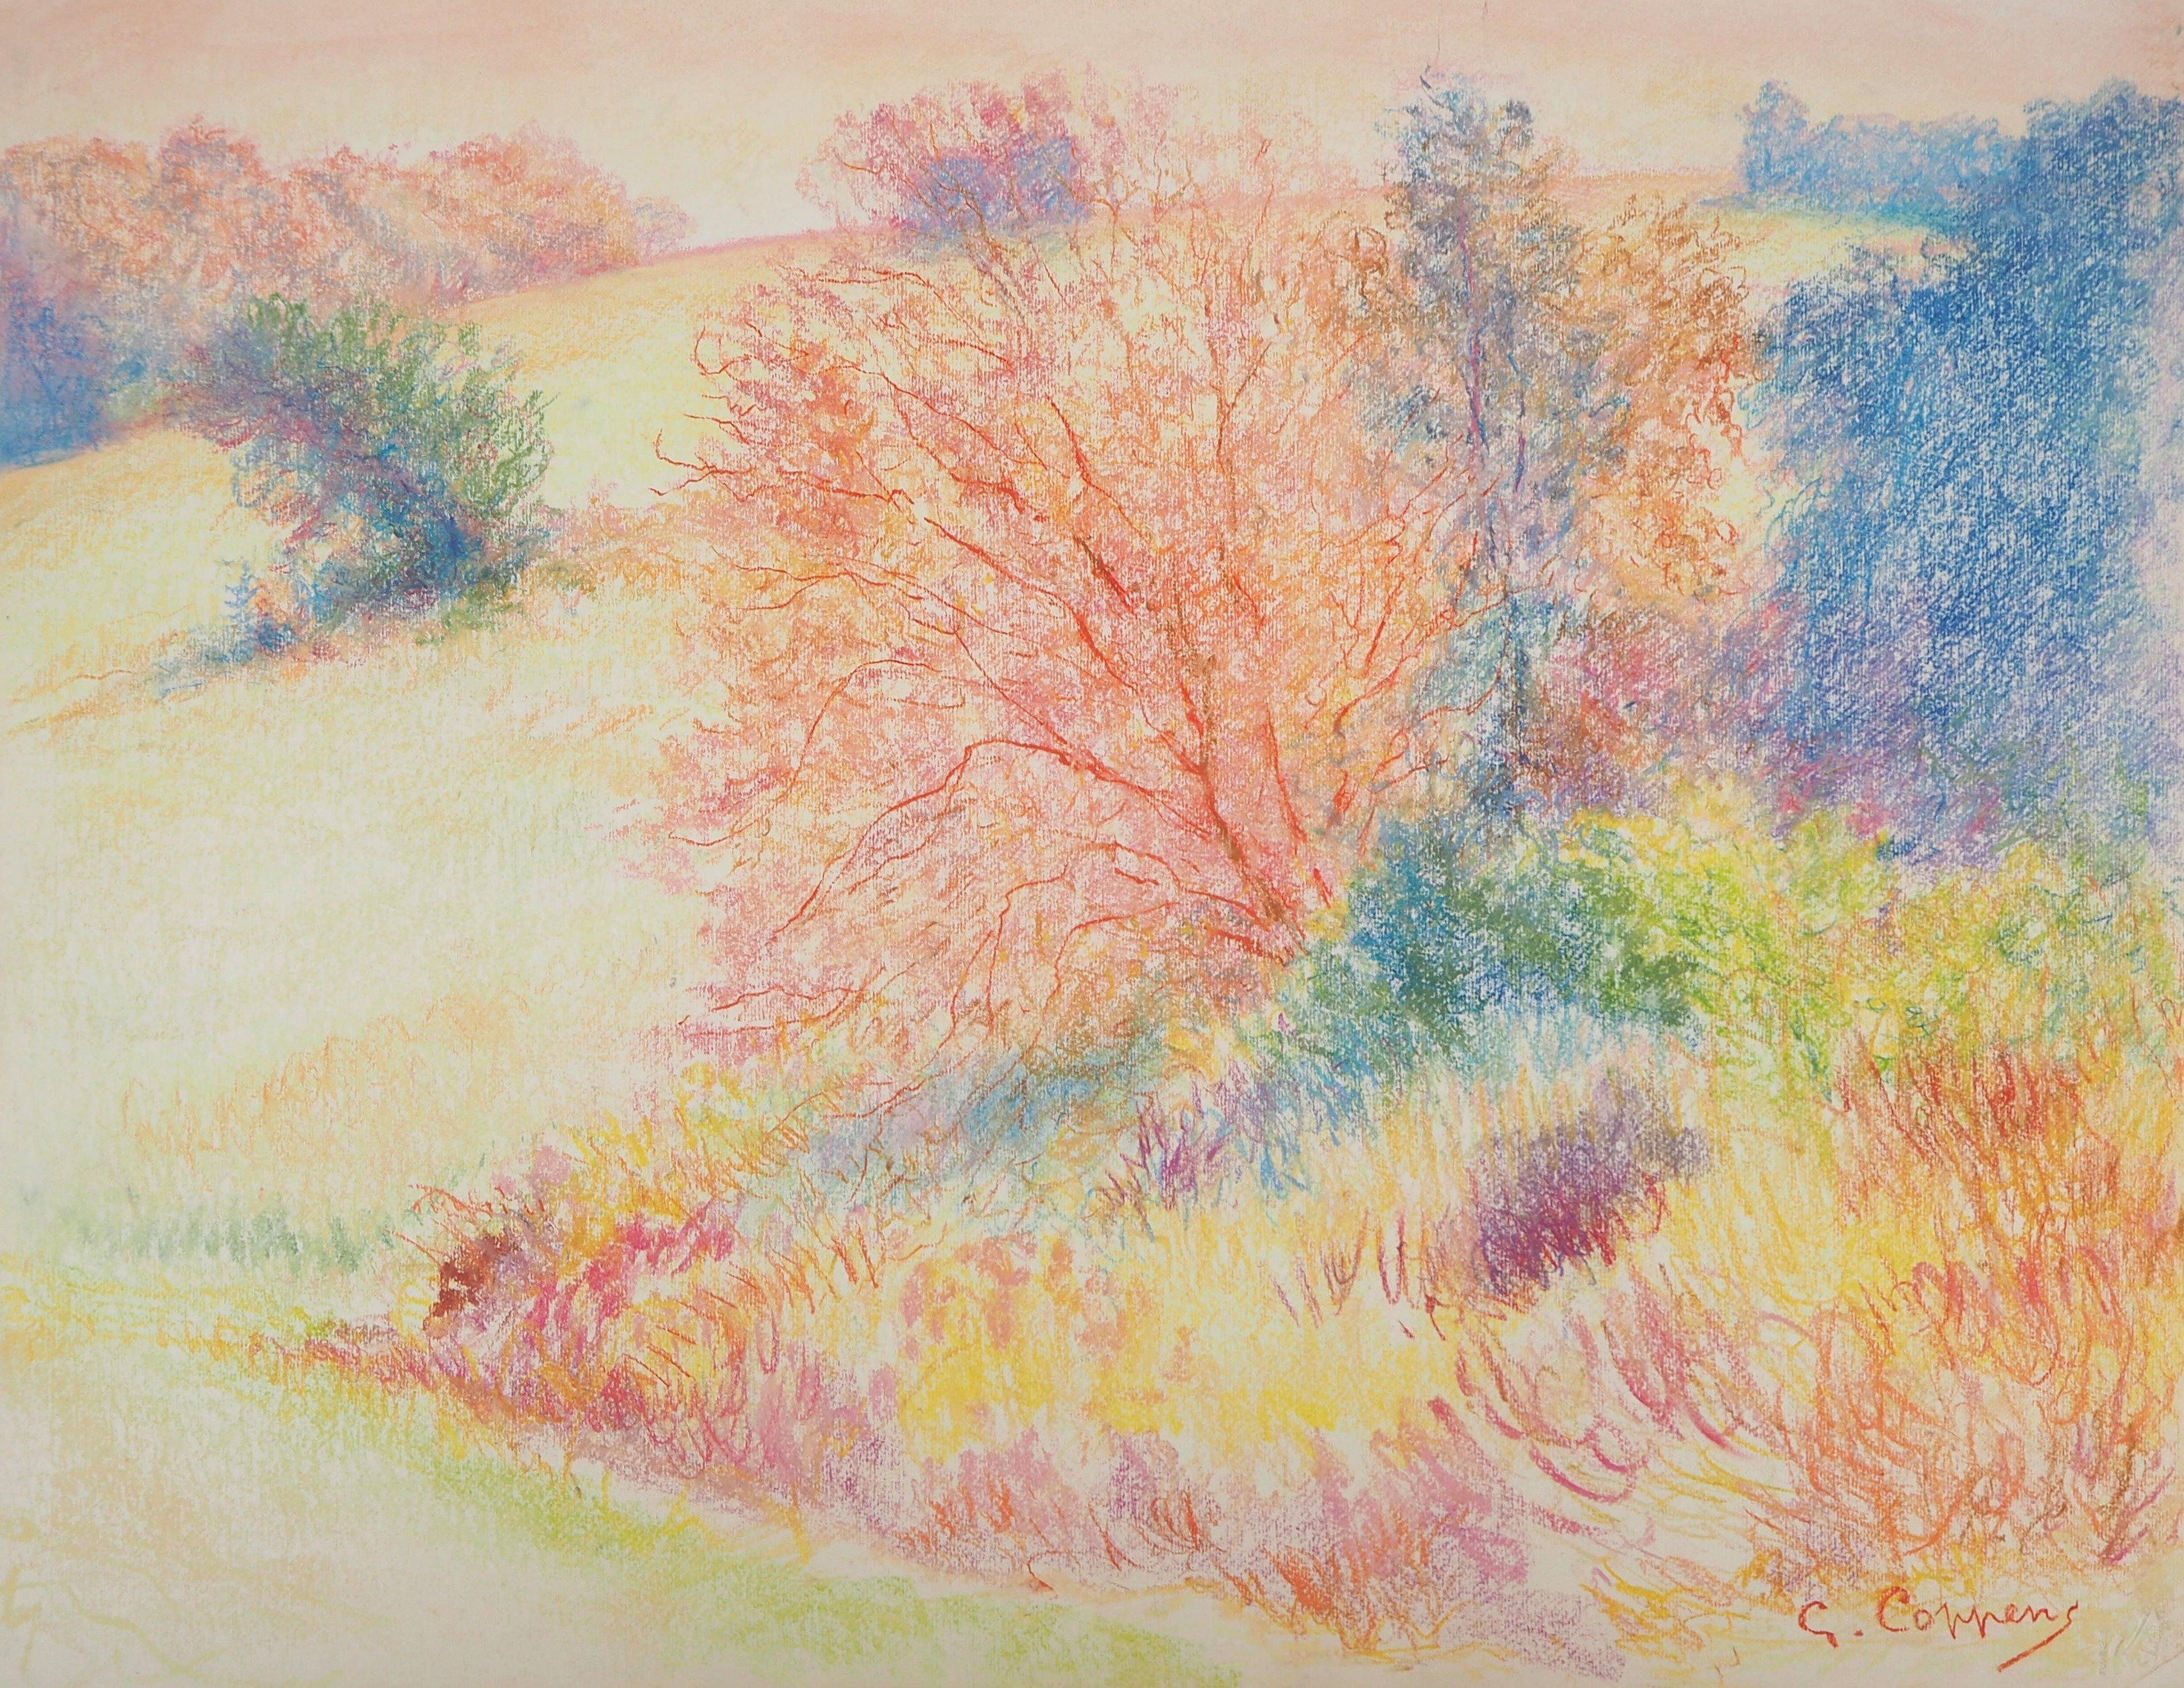 Gaston Coppens Landscape Art - Autumn Charm - Original Signed Charcoals Drawing